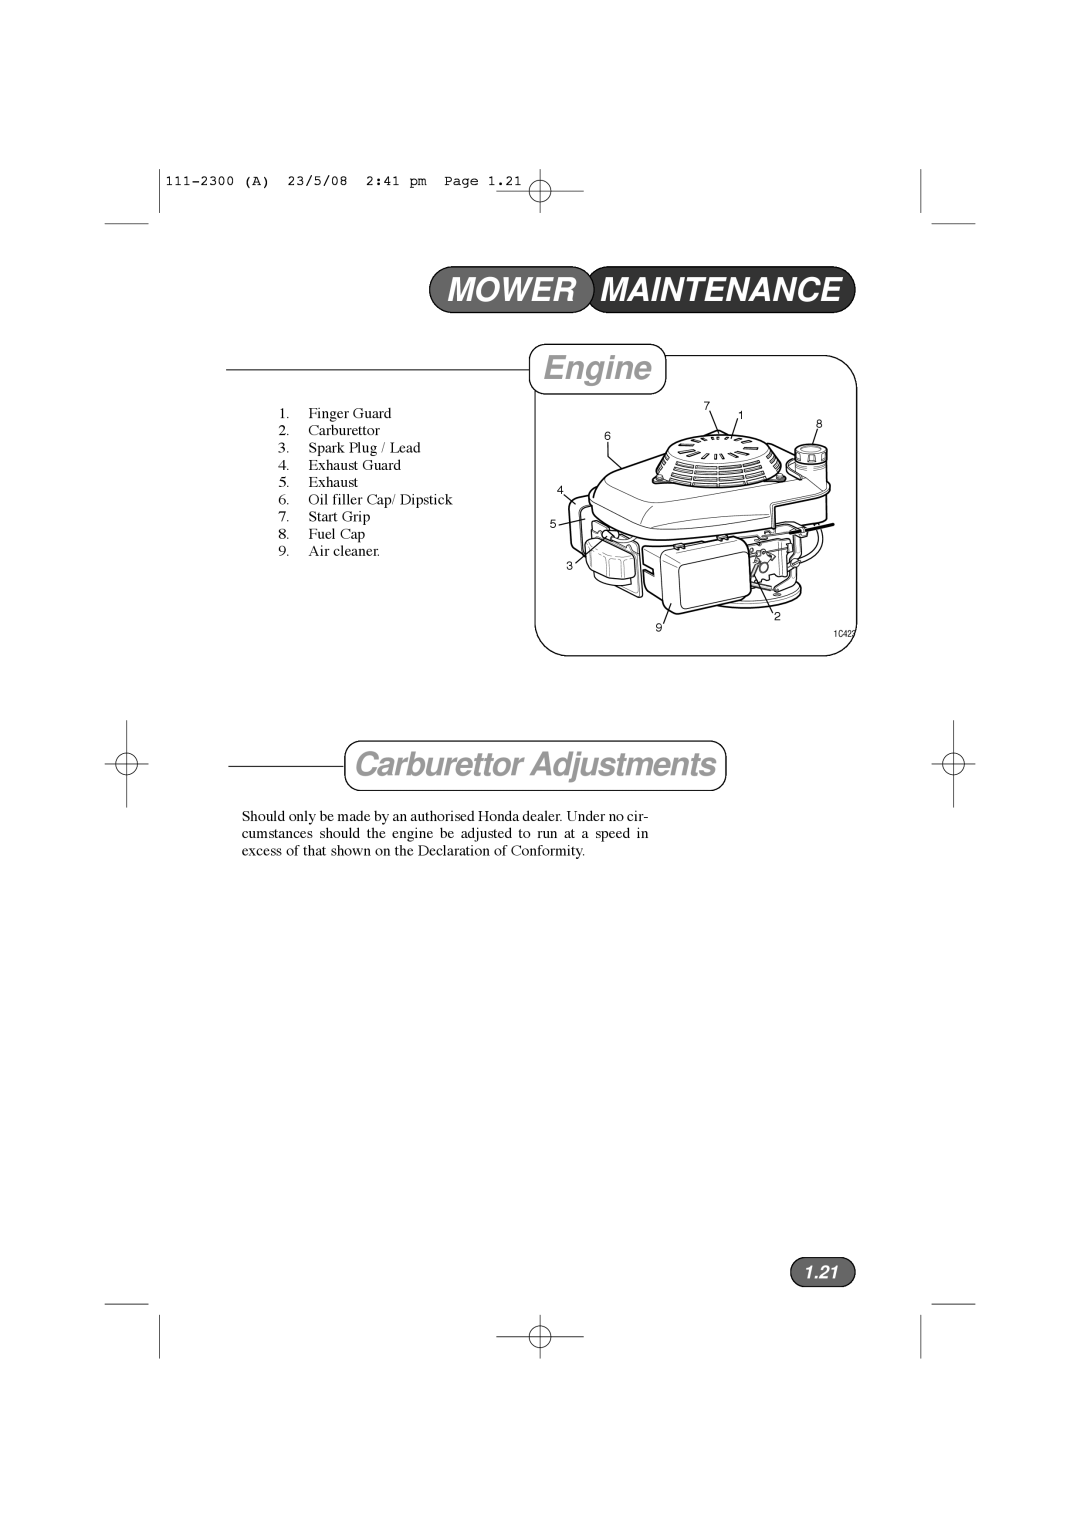 Hayter Mowers 435F, 434F, 433F, 432F manual Mower Maintenance, Engine, Carburettor Adjustments, 1.21 